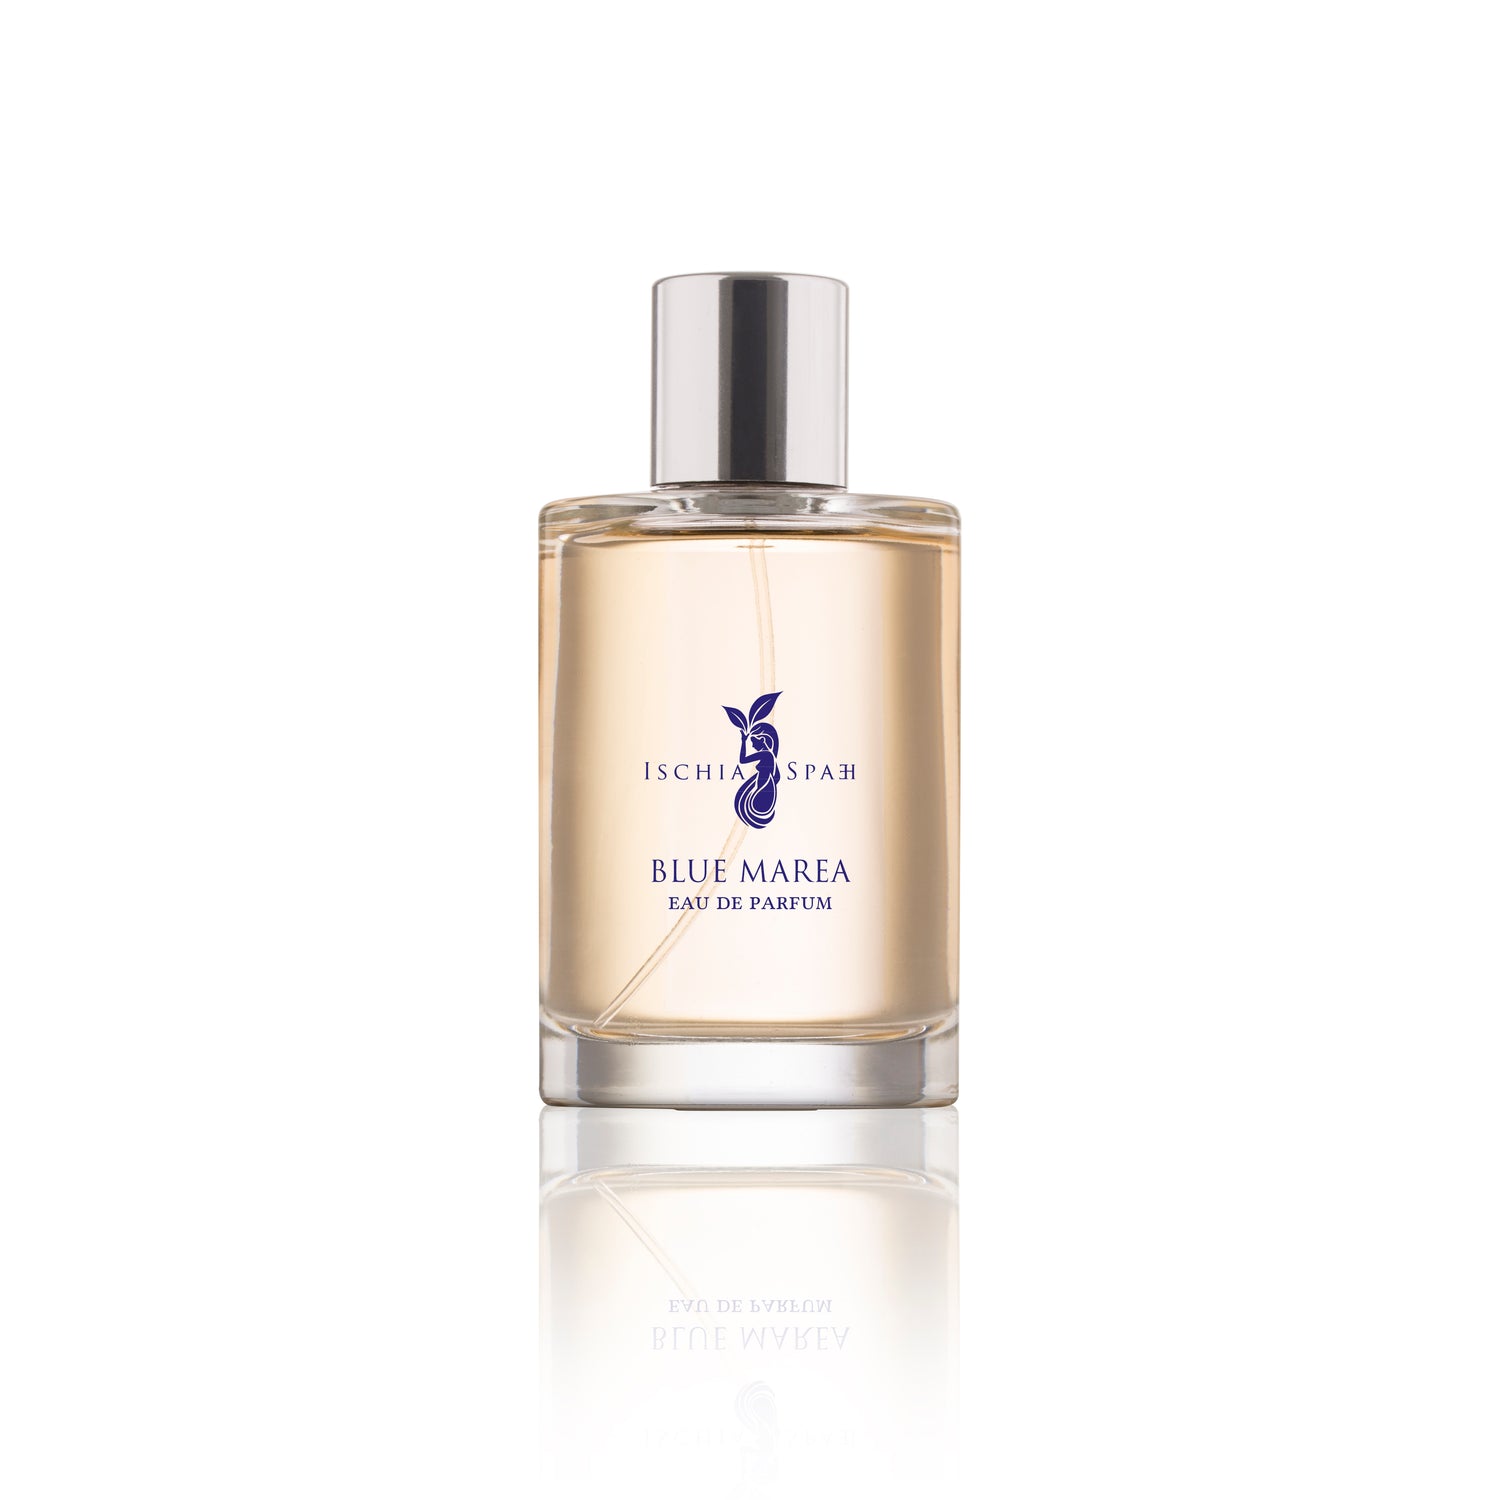 Blue marea – Eau de parfum | Ischia SPAEH